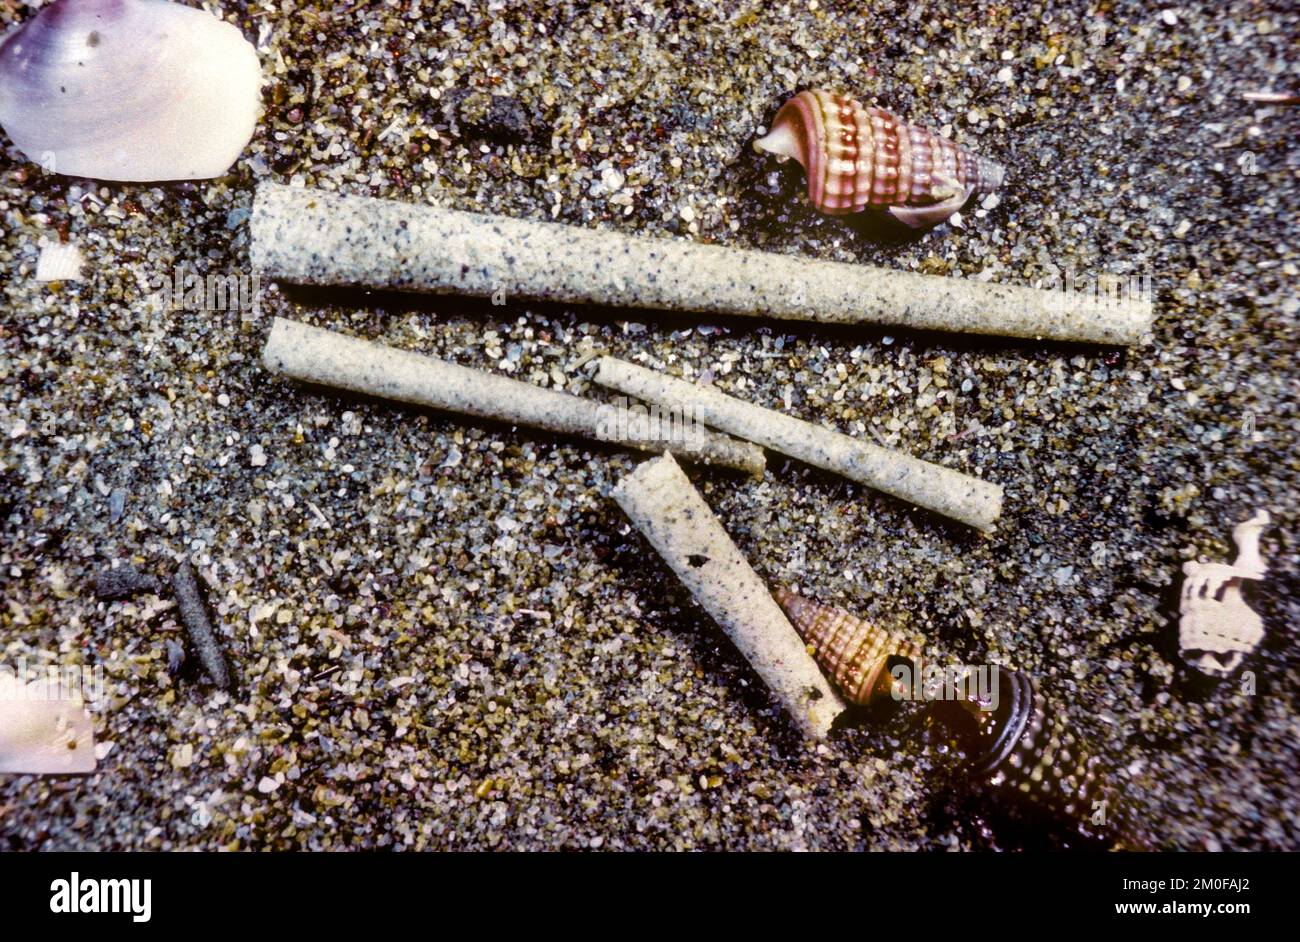 trumpet worm (Amphictene koreni, Lagis koreni, Pectinaria koreni), narrow conical tubes made of grains of sand and shell fragments together with Stock Photo